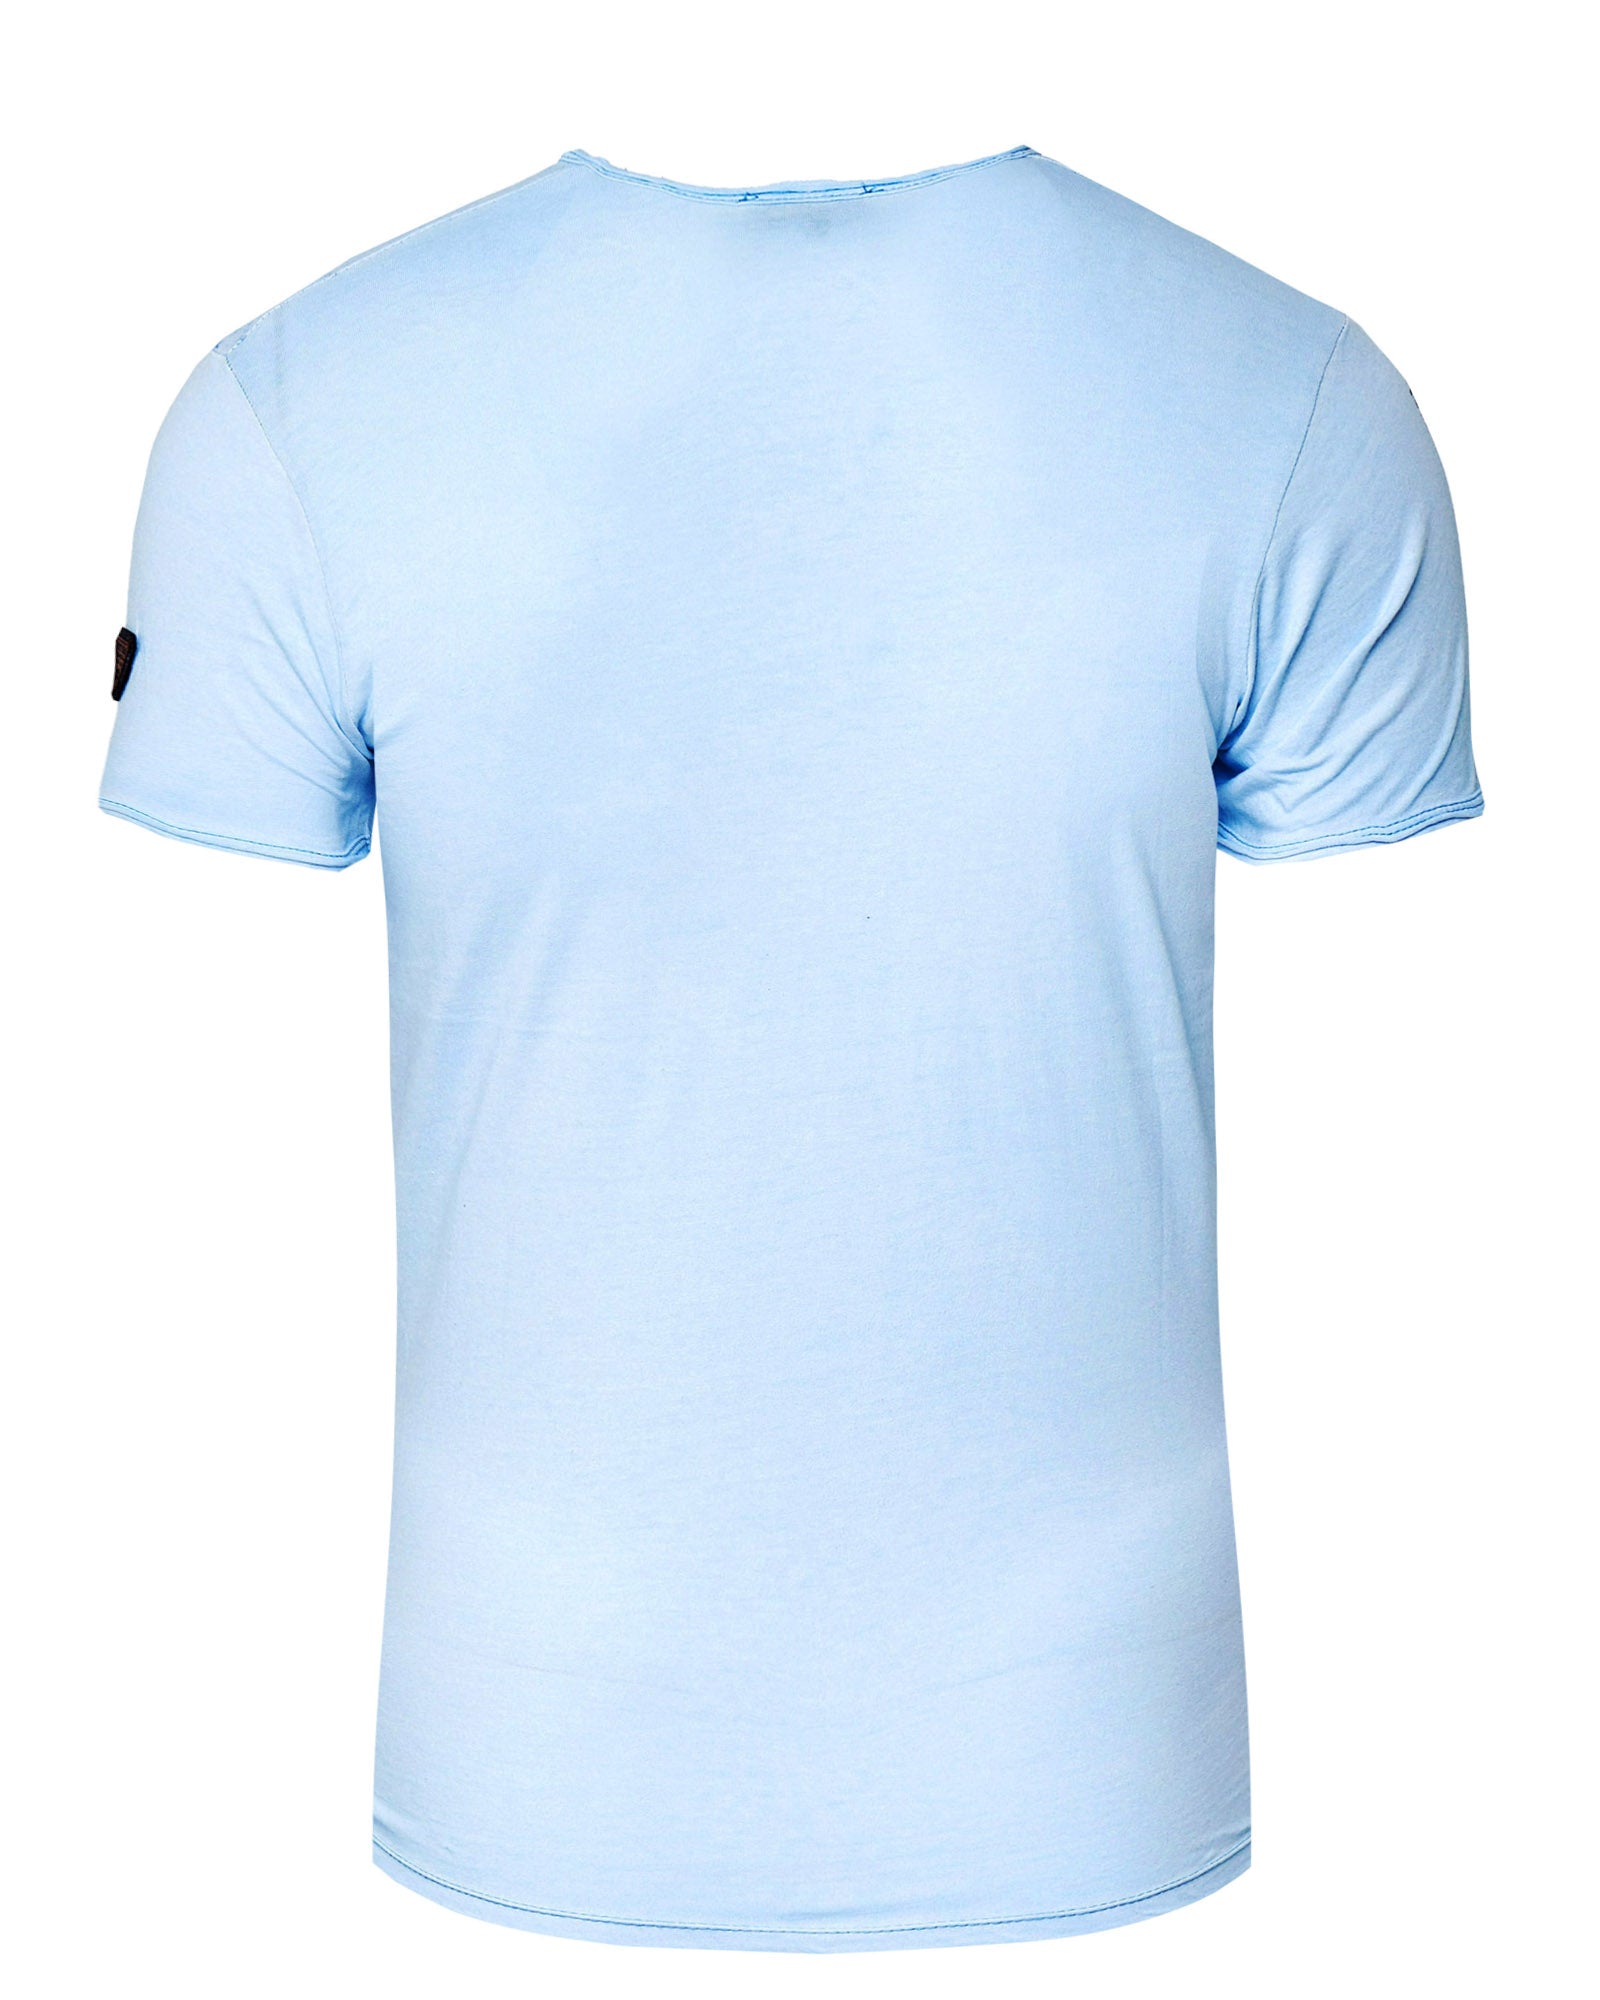 Stwrring crew t-shirt - Light blue